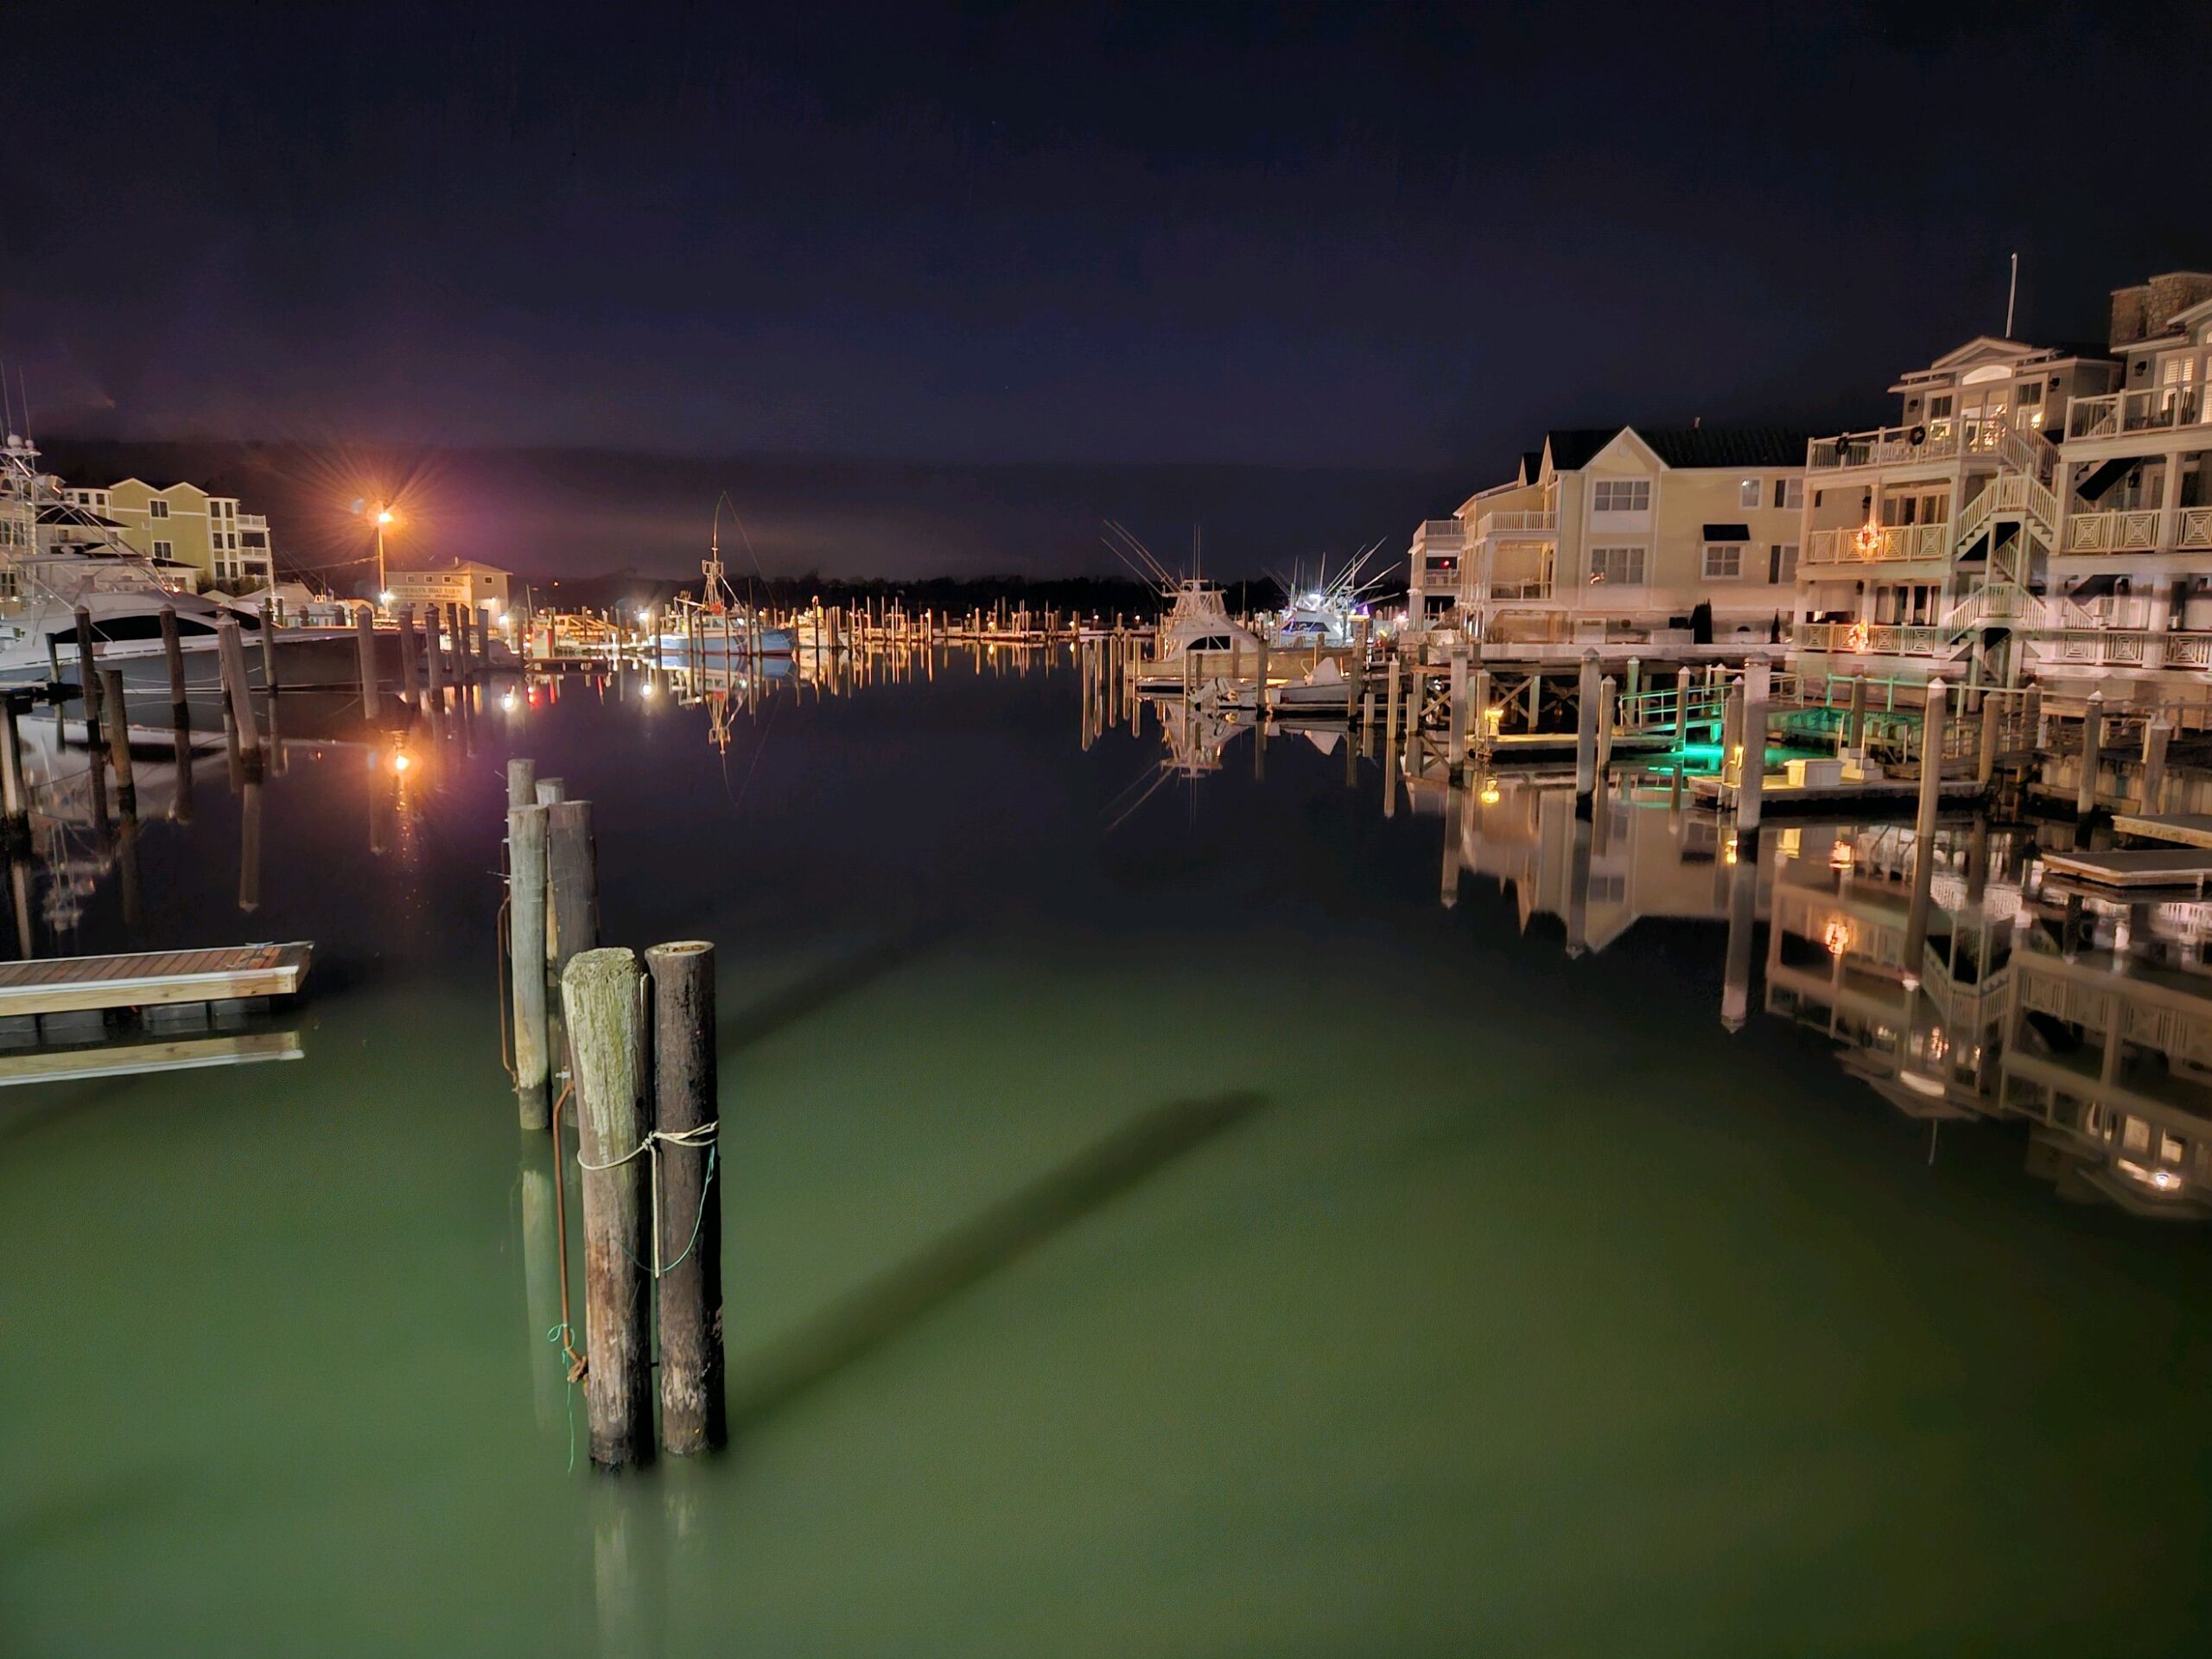 Silent Night the docks on the Harbor